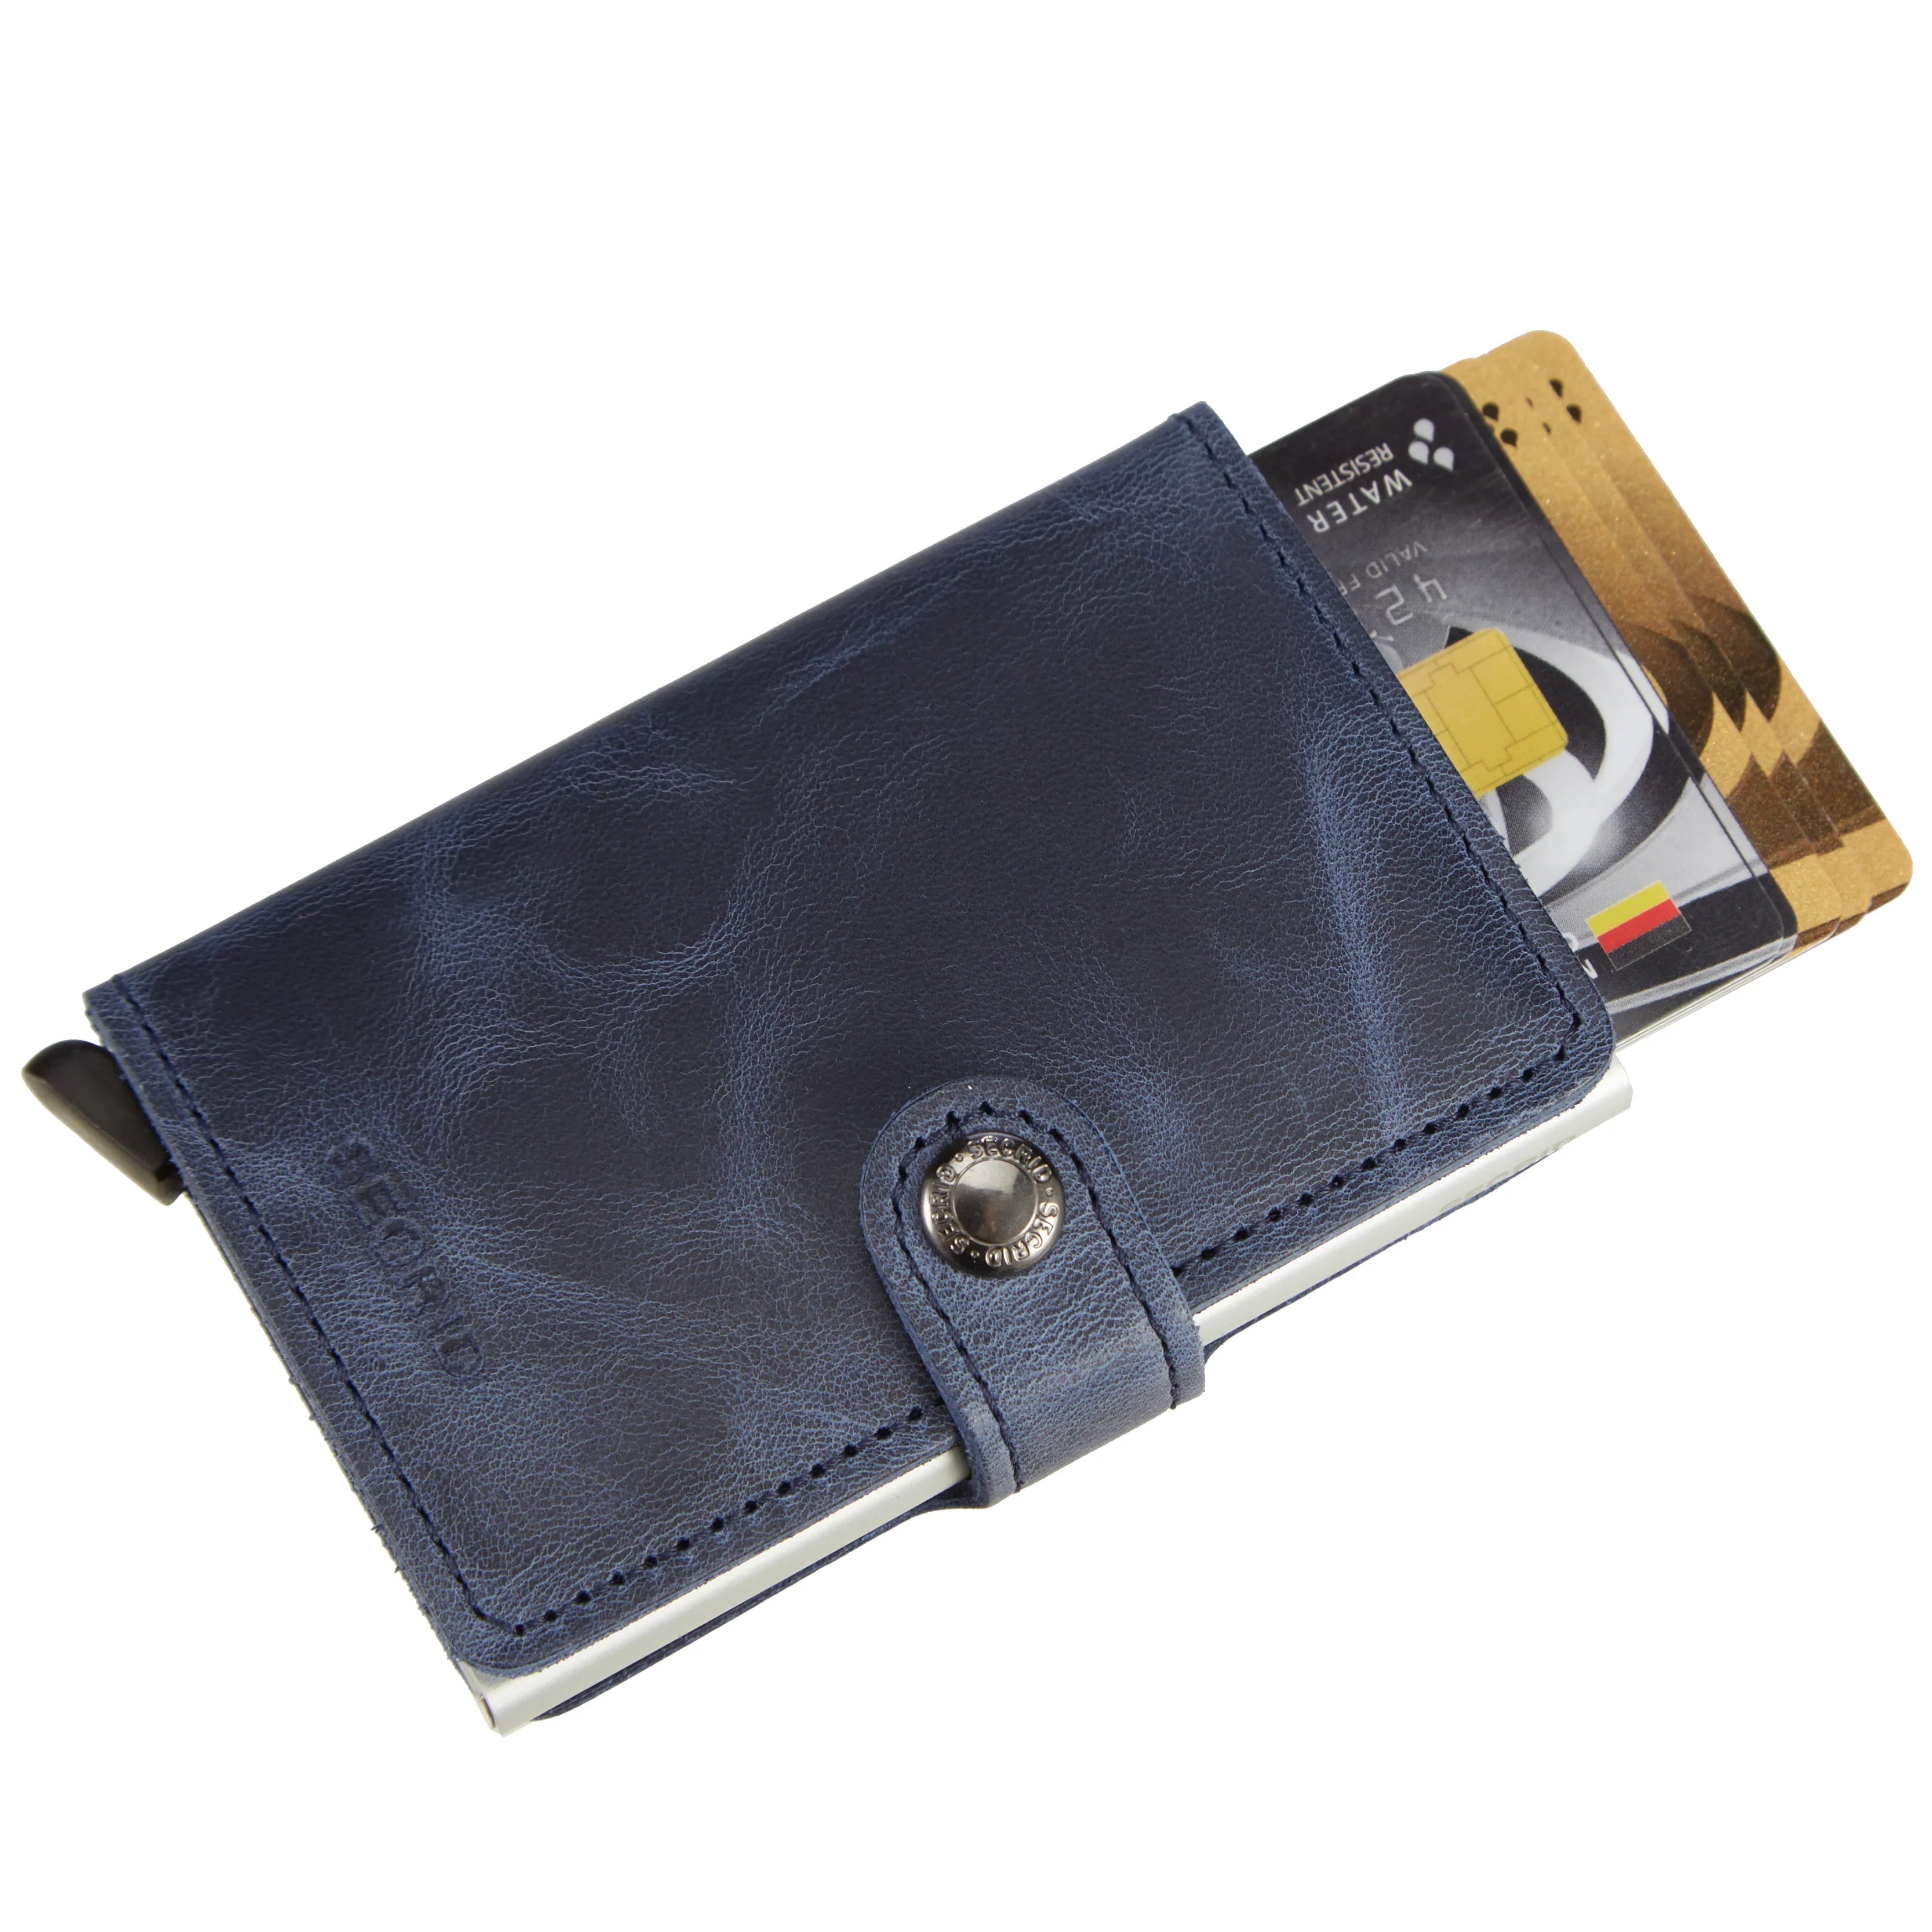 Secrid Wallets Miniwallet Vintage 10 cm - marron